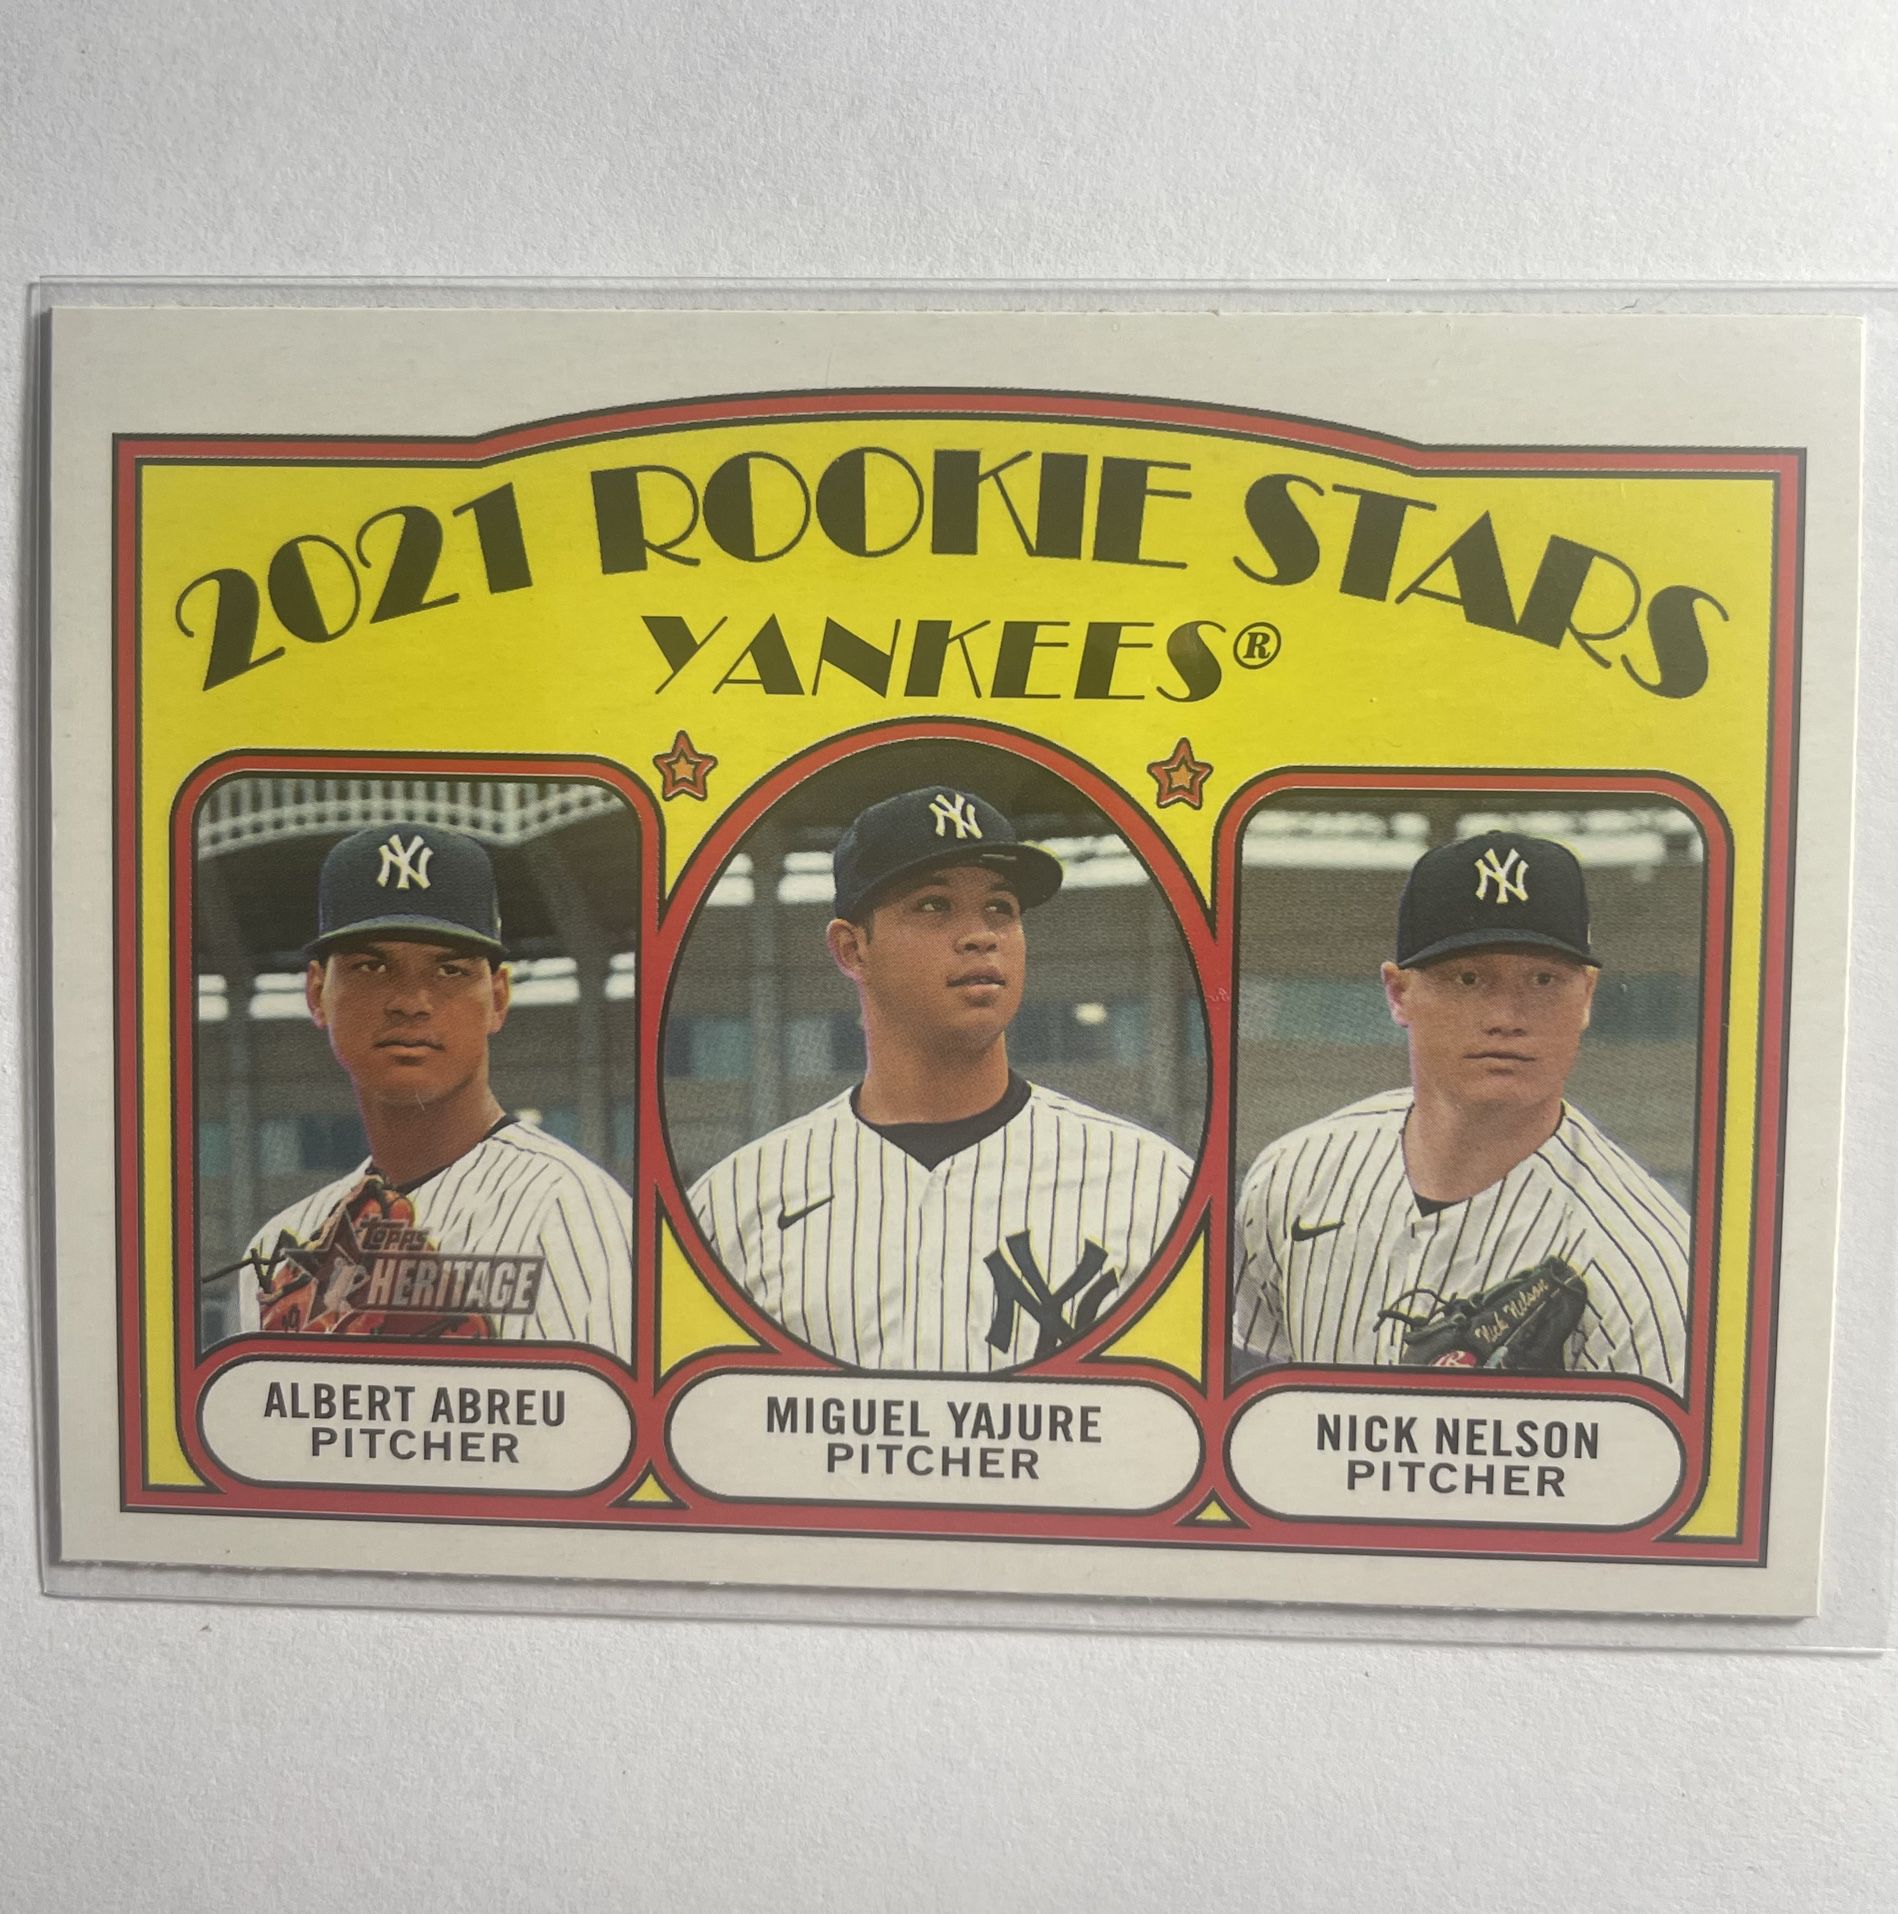 Mint 2021 Topps Heritage Baseball Nick Nelson, Albert Abreu, Miguel Yajure RC #363 New York Yankees Rookie Stars MLB Card